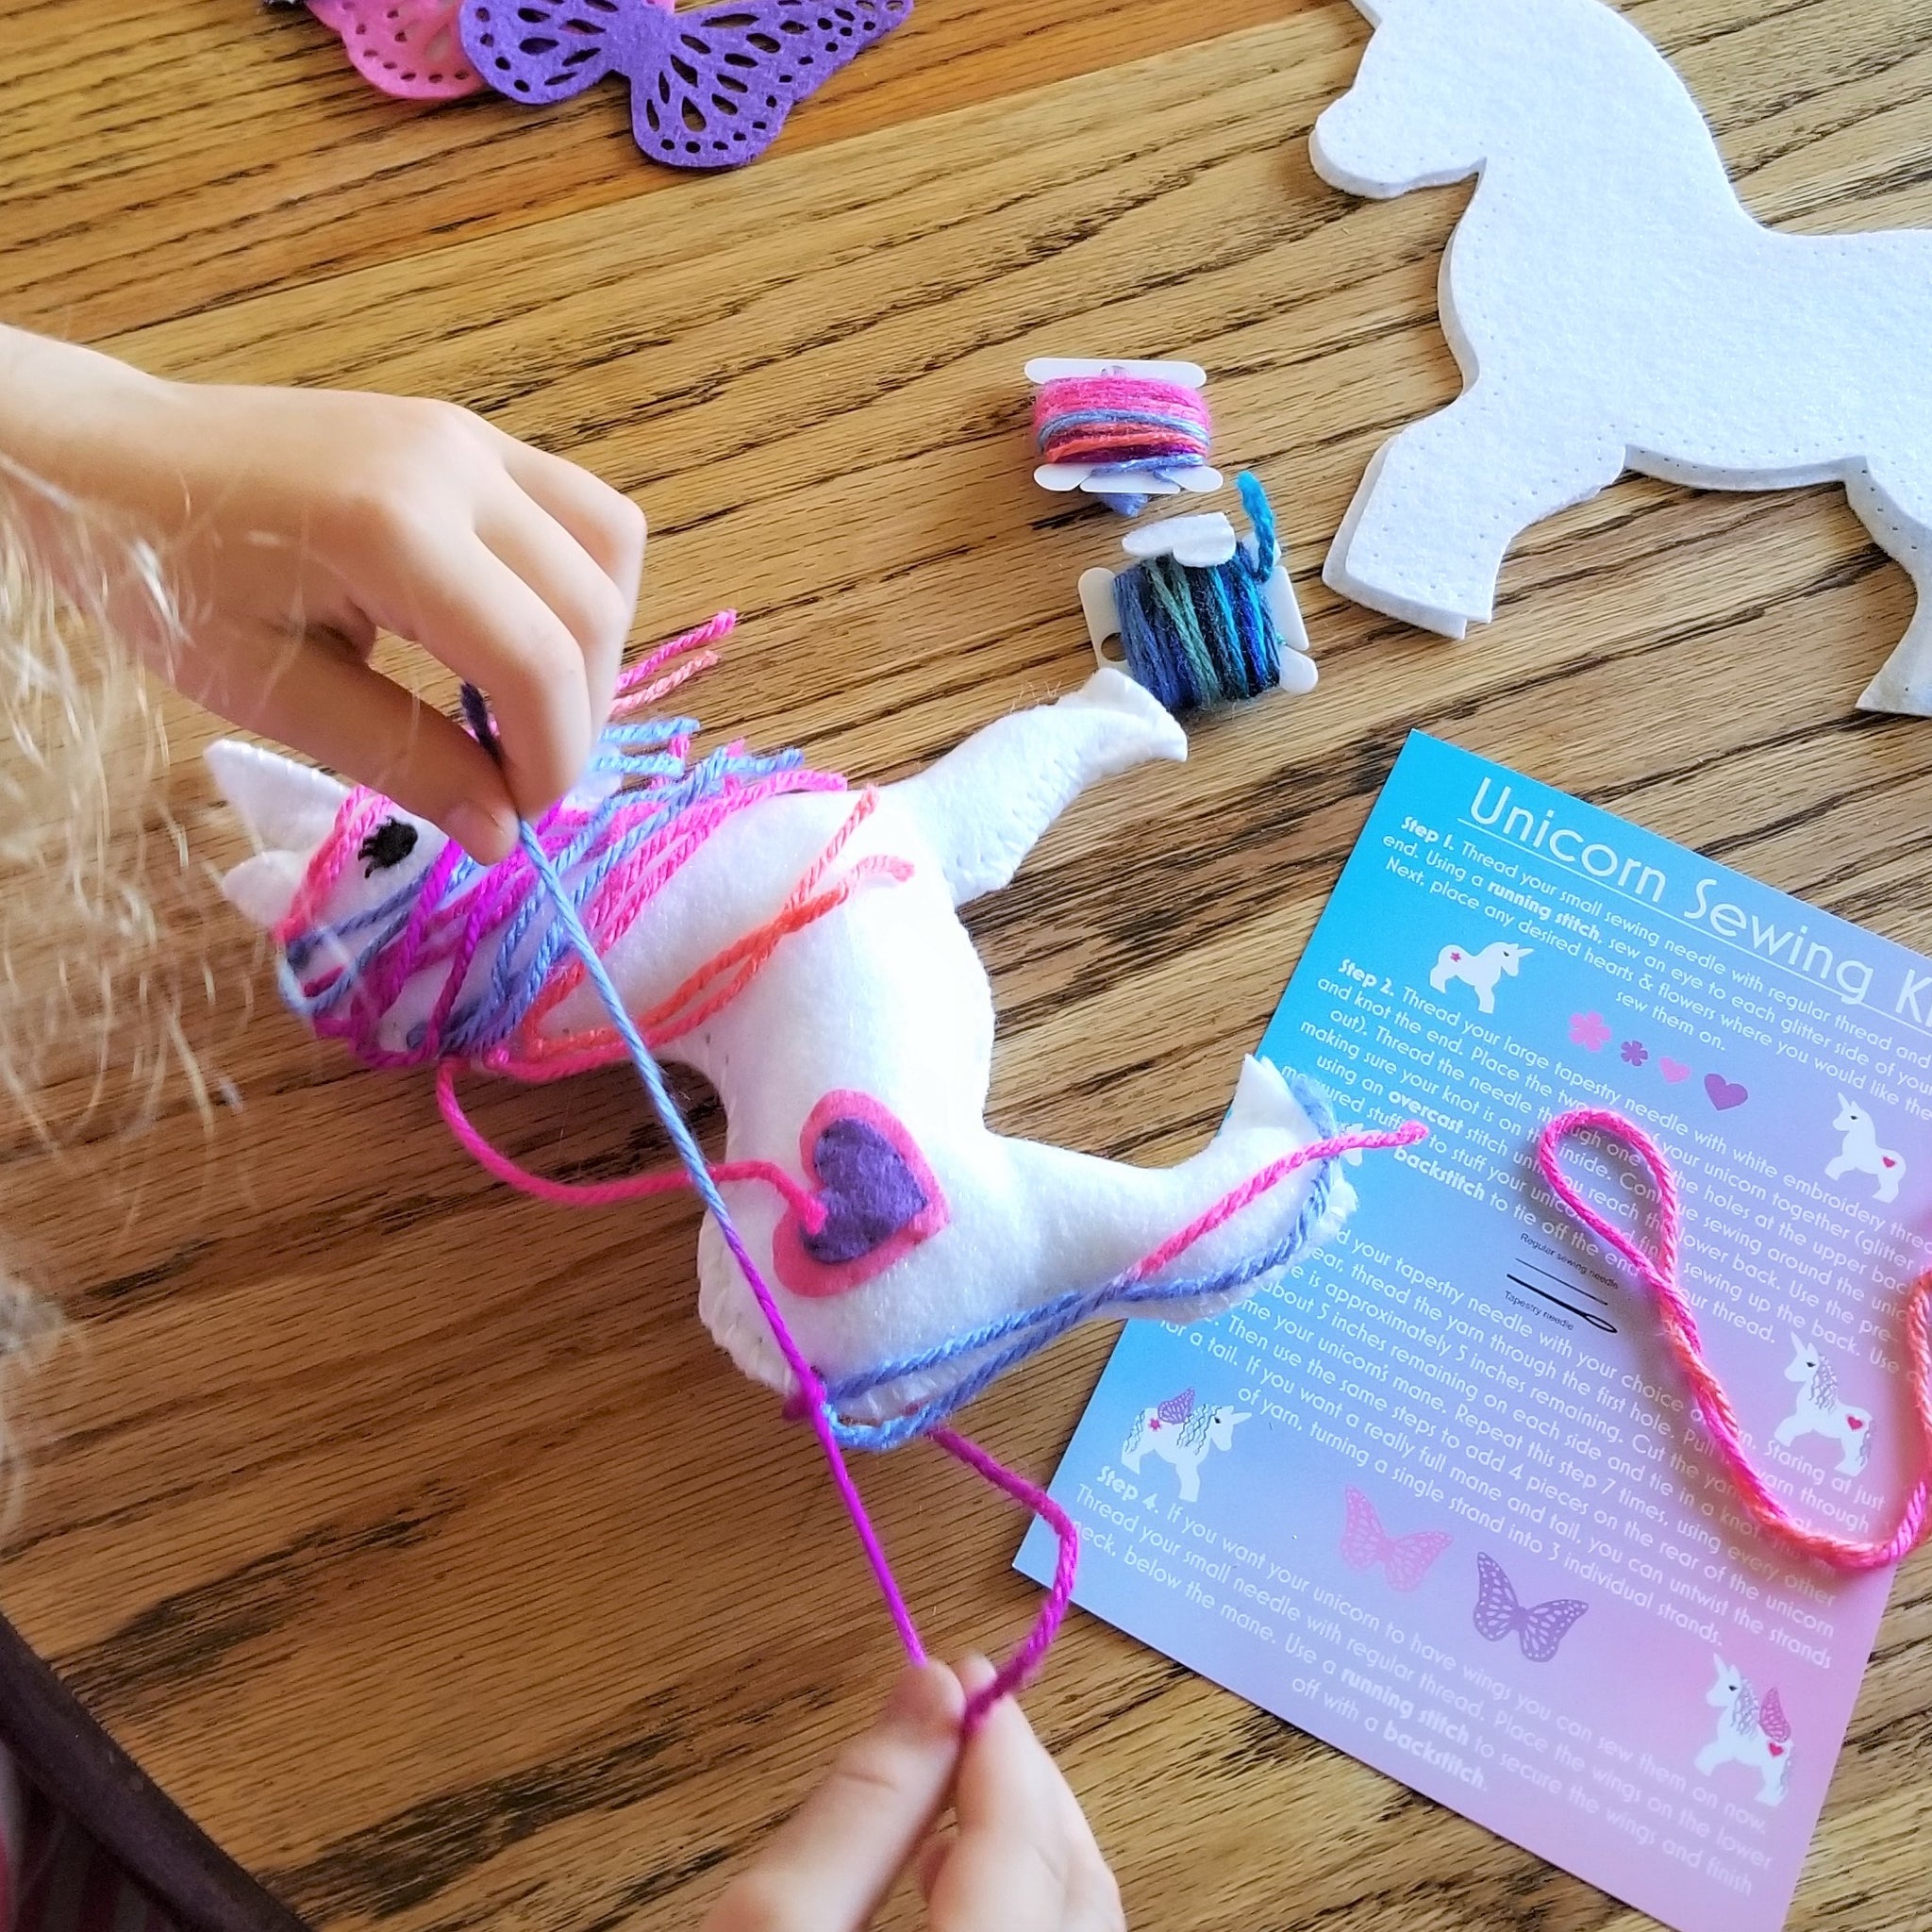 Sewing Kit for Kids Ages 8-12, Kids Sewing Kit, Unicorn Crafts Kit, Felt  Plush Unicorn Toy, Unicorn Sewing Kit, First Sewing Kit for Kids Beginners  - Coupon Codes, Promo Codes, Daily Deals